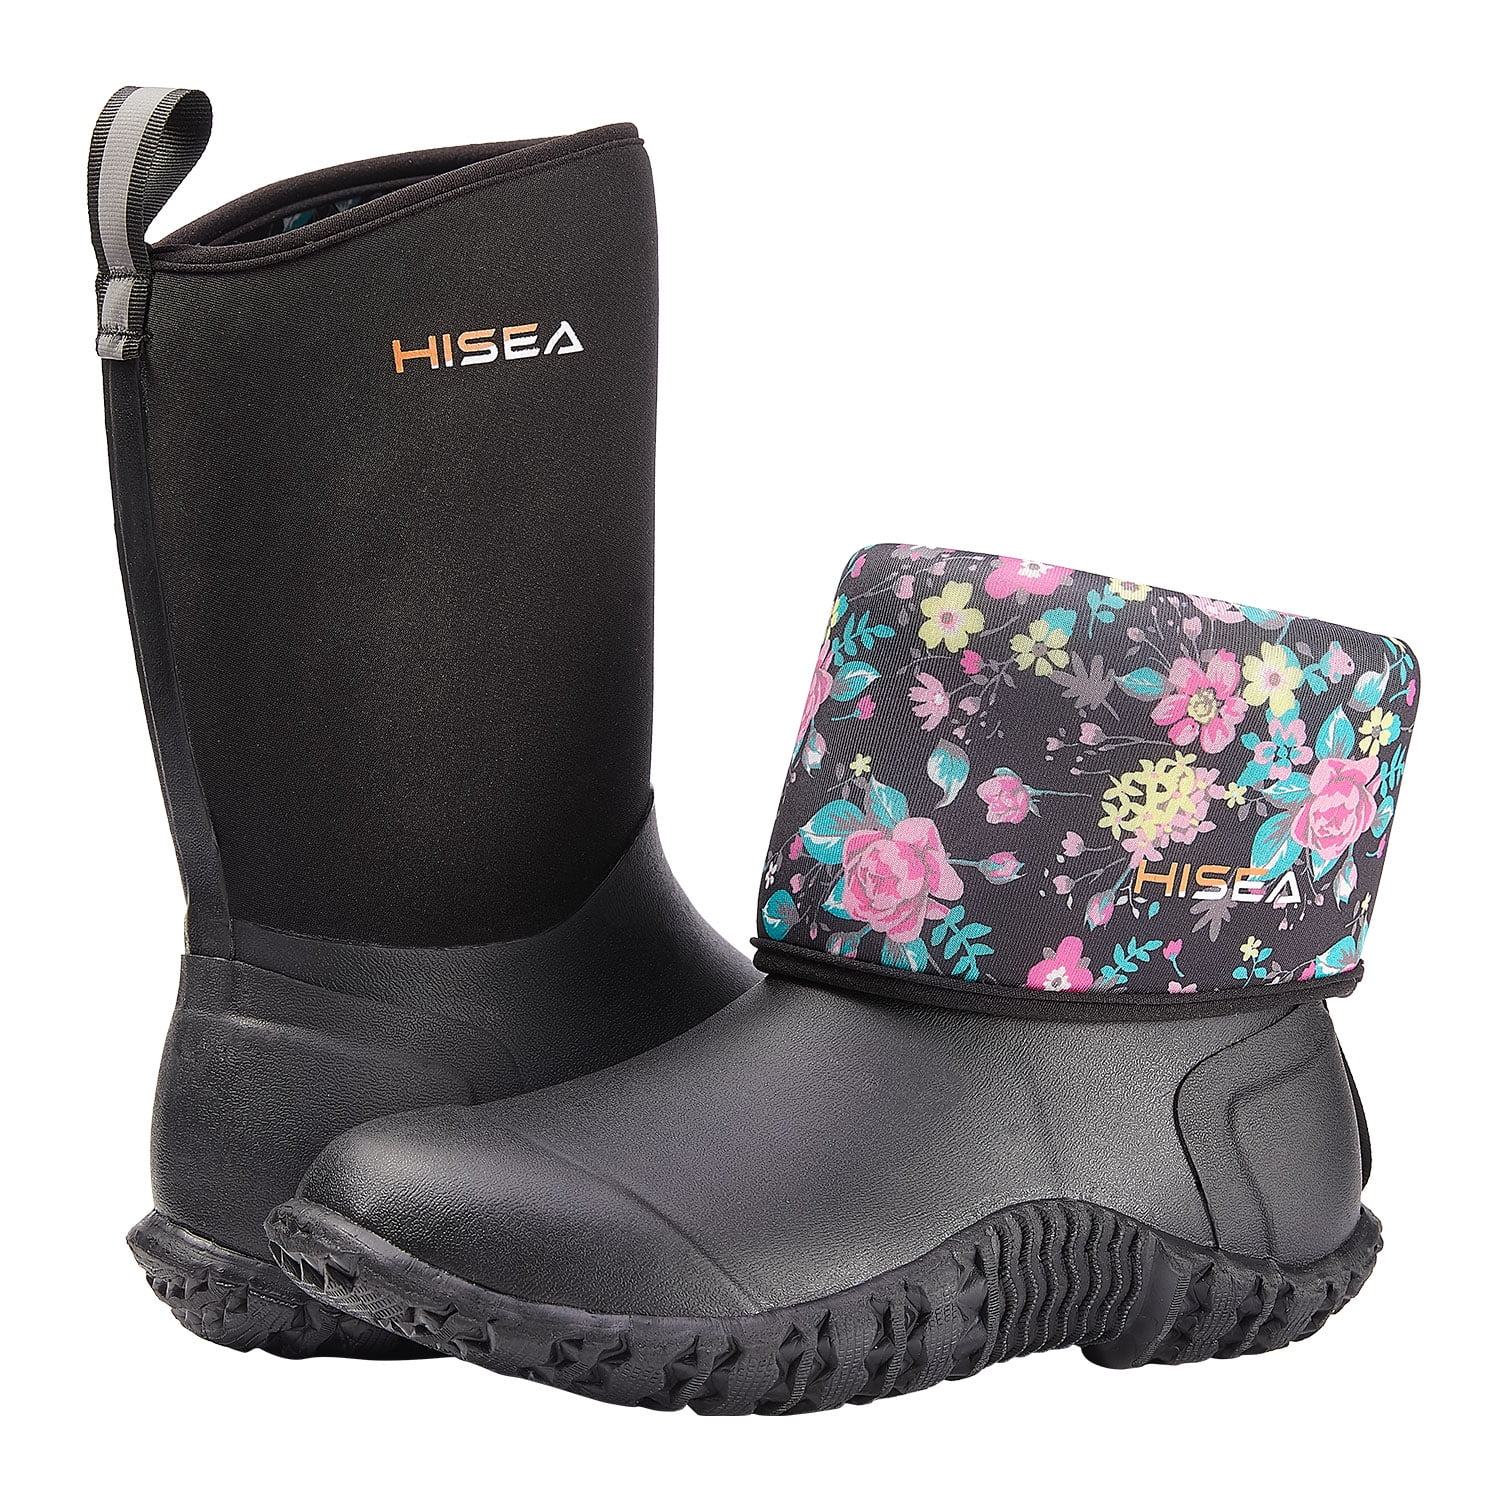 HISEA Women's Rubber Garden Boots Waterproof Insulated Yard Gardening Shoes Mid Height for Muck Mud Working Outdoor 